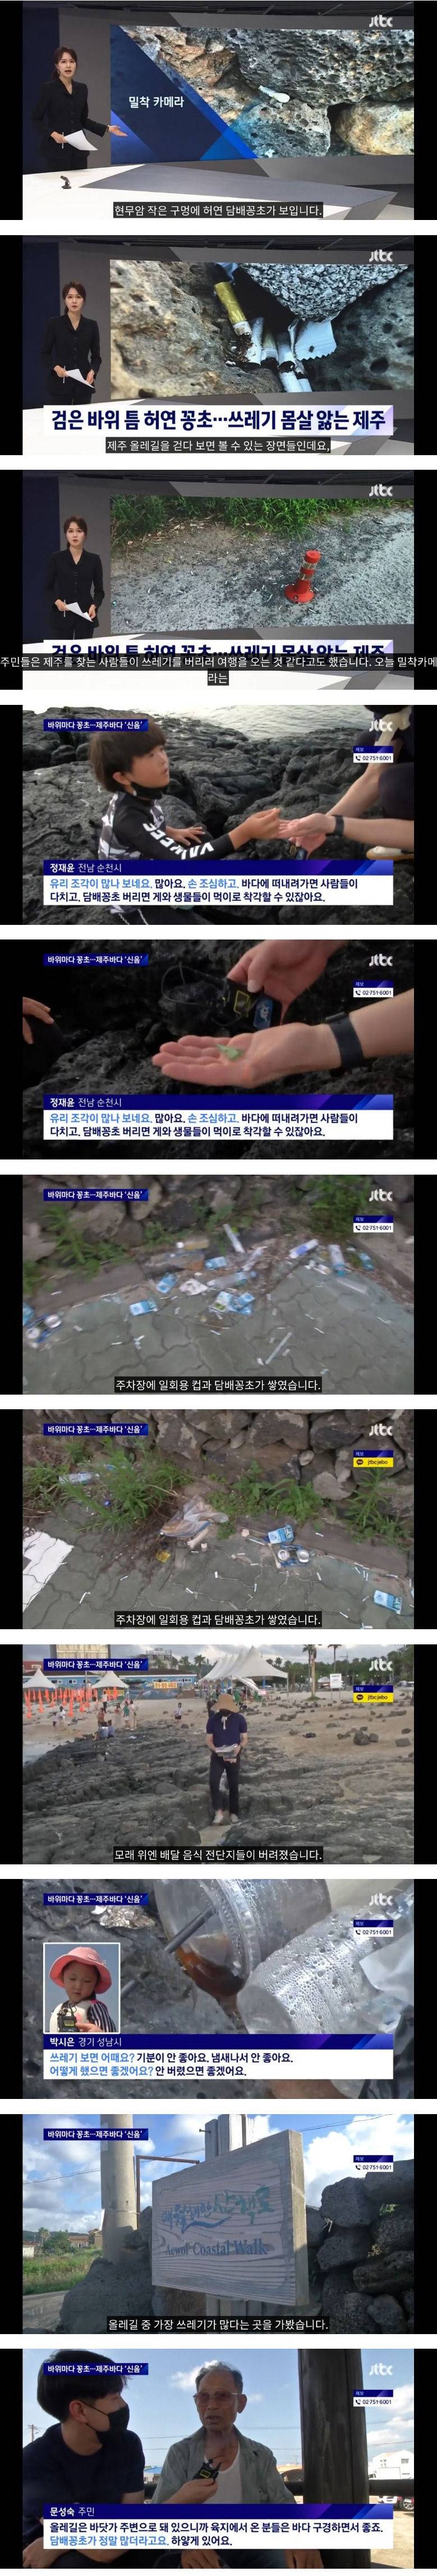 Jeju Island's trash these days